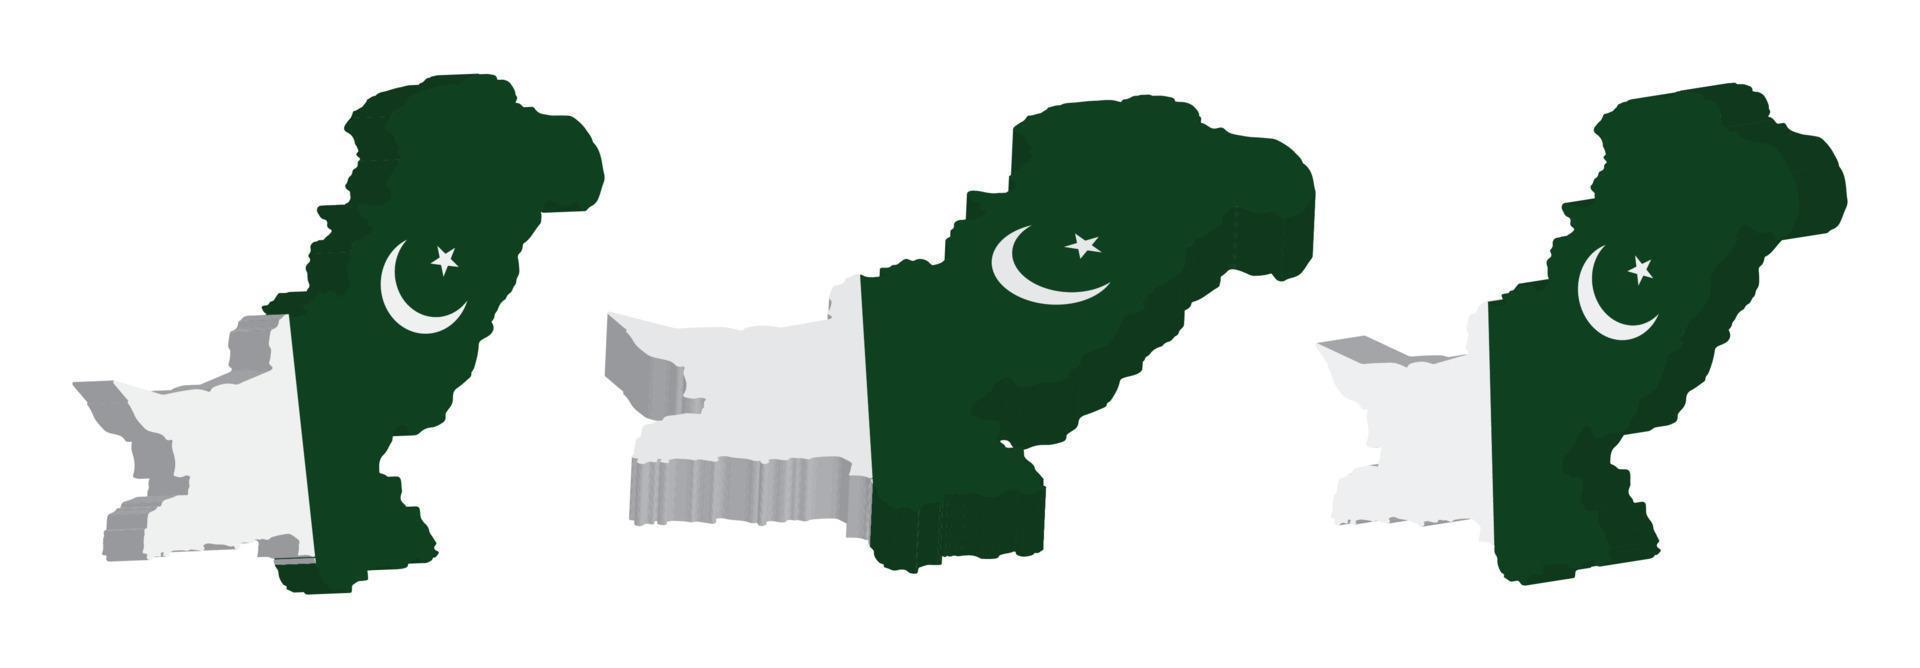 Realistic 3D Map of Pakistan Vector Design Template